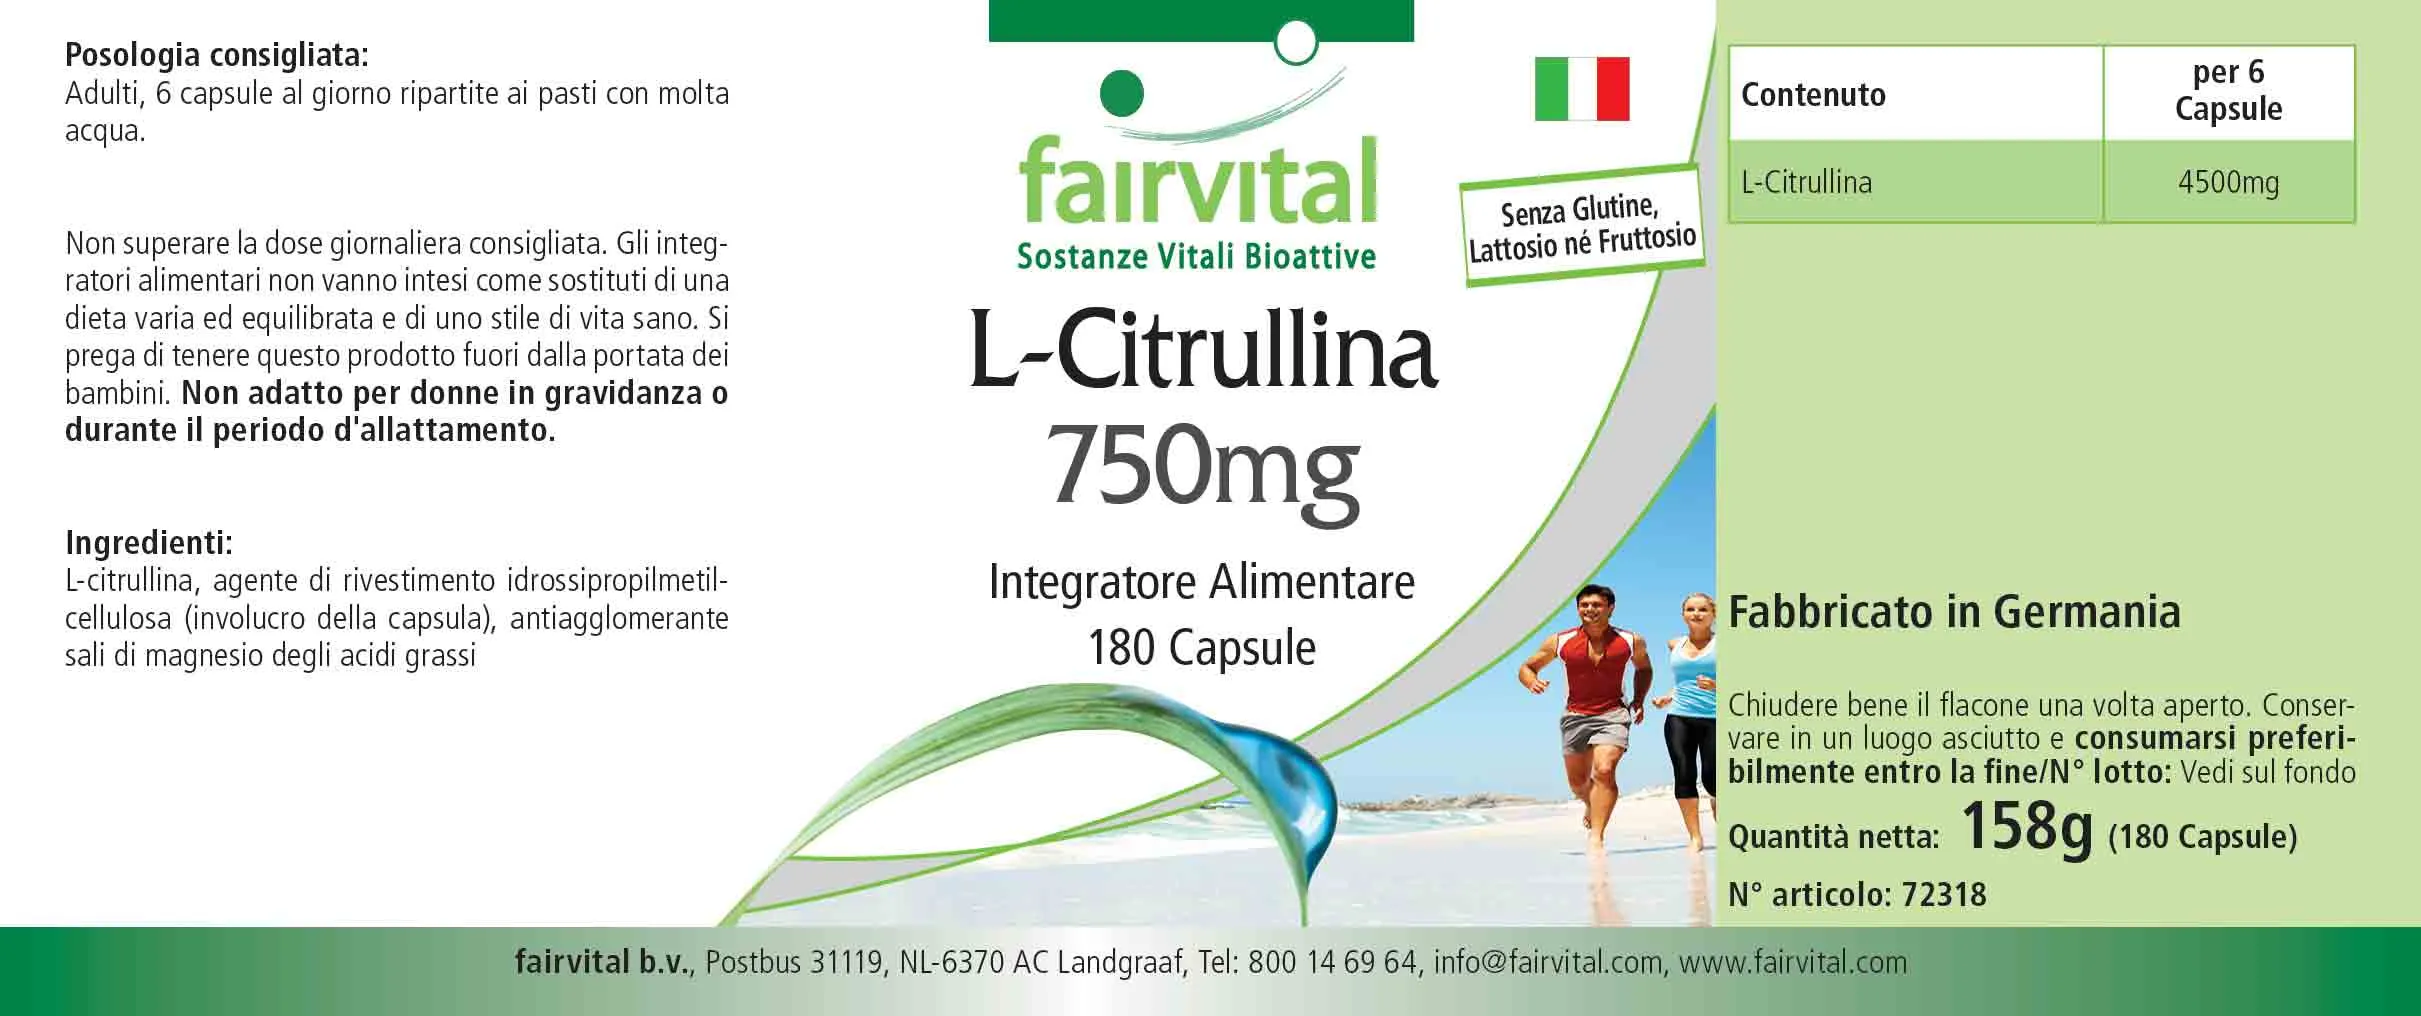 L-Citrulline 750mg - 180 gélules